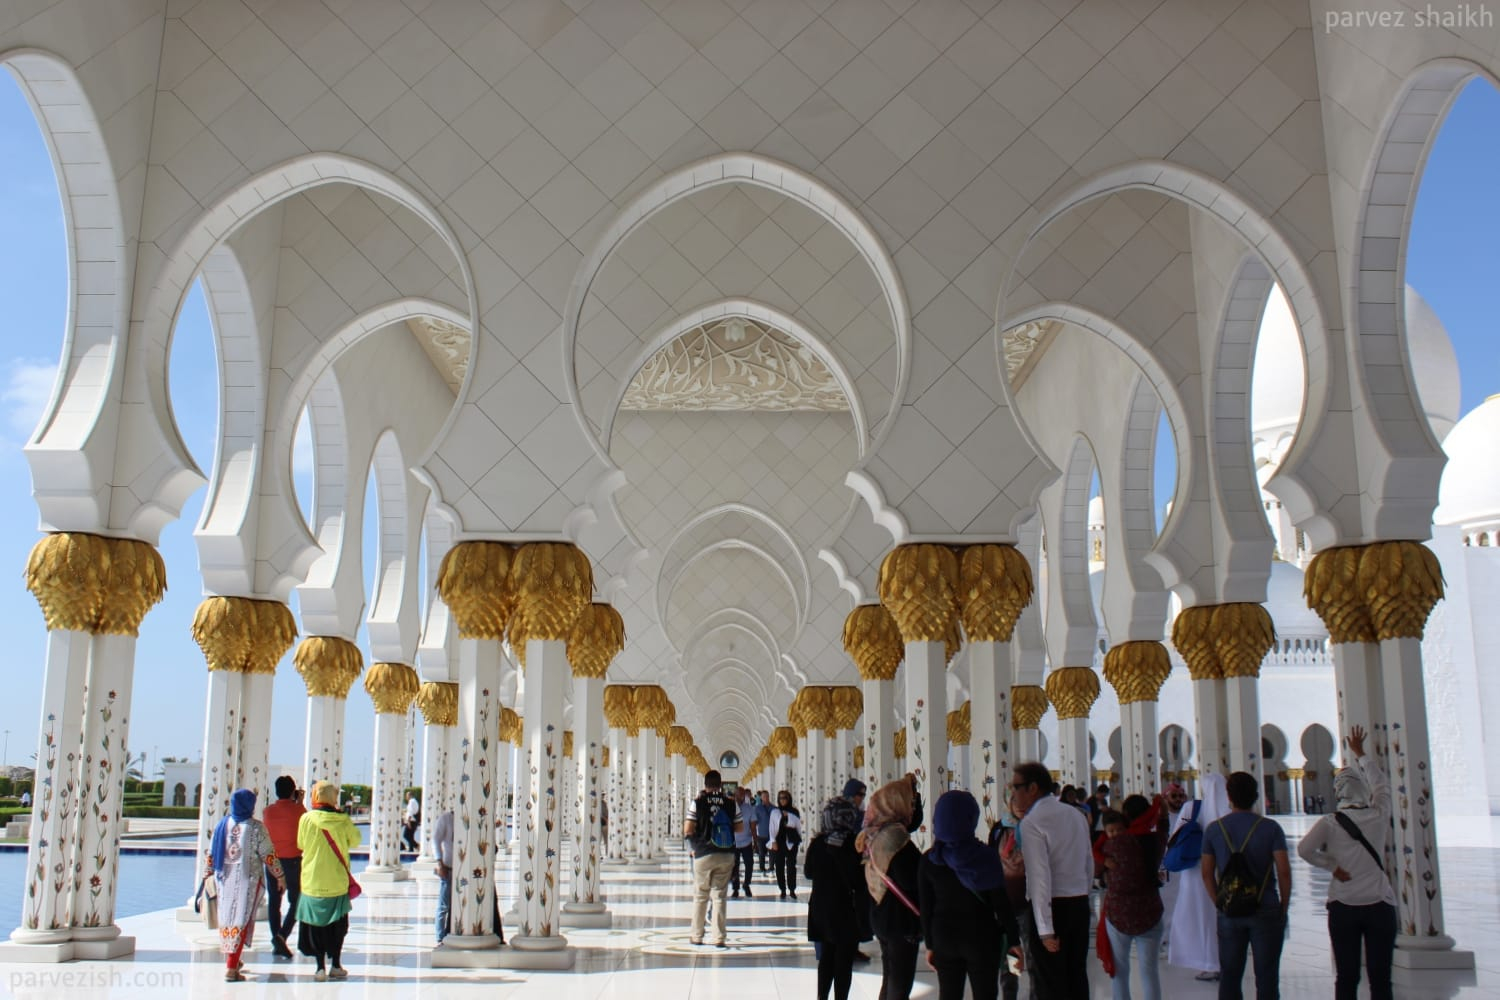 Abu Dhabi Grand Mosque Pillars